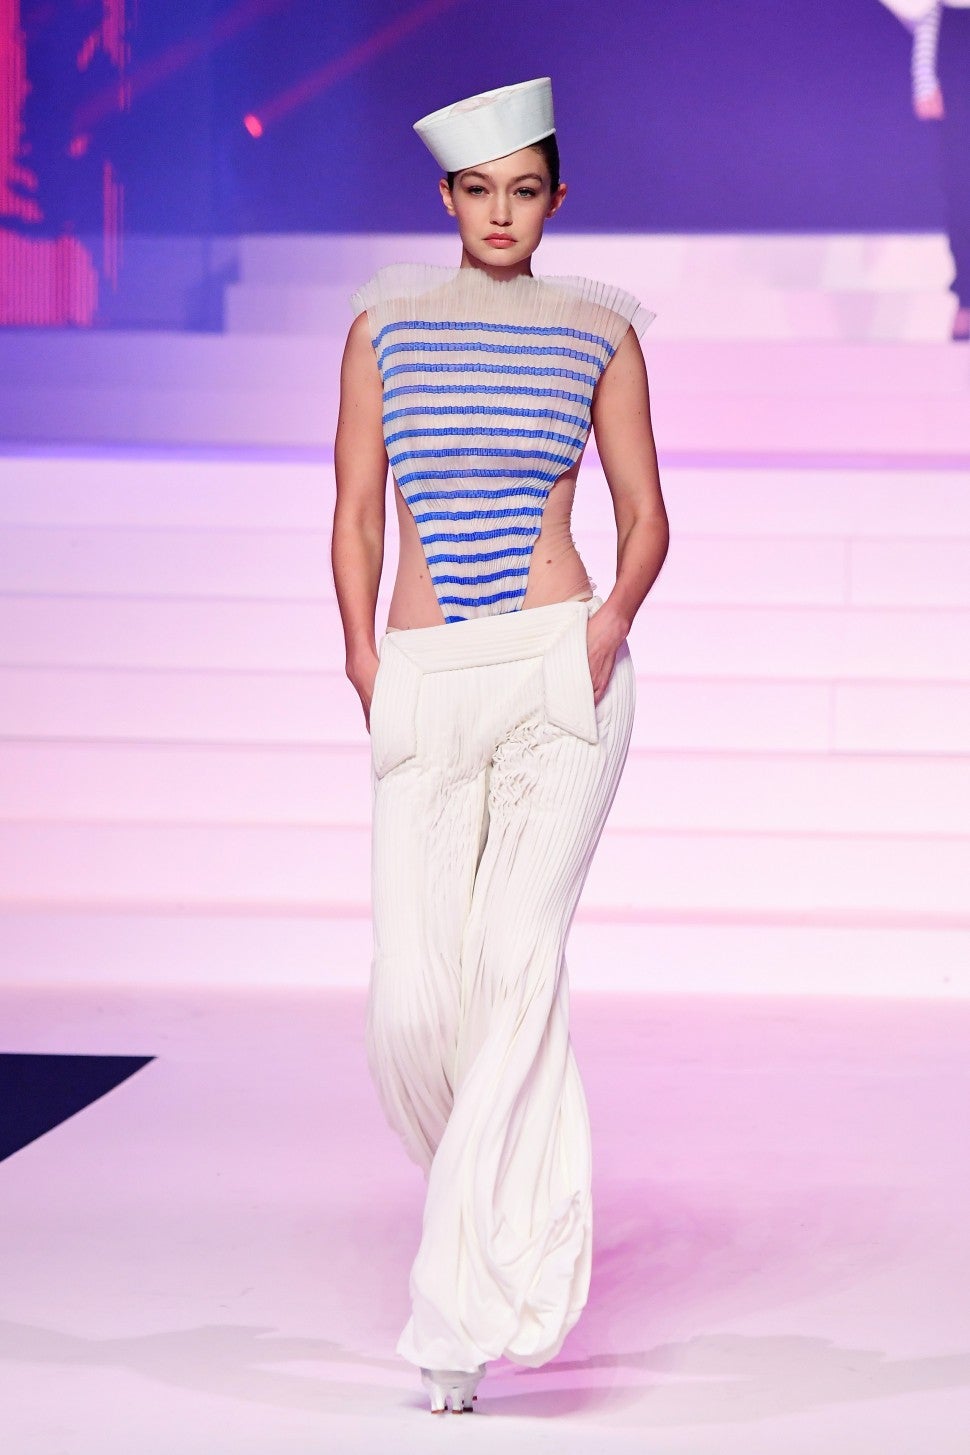 Gigi Hadid walking in Jean-Paul Gaultier Haute Couture Spring/Summer 2020 show